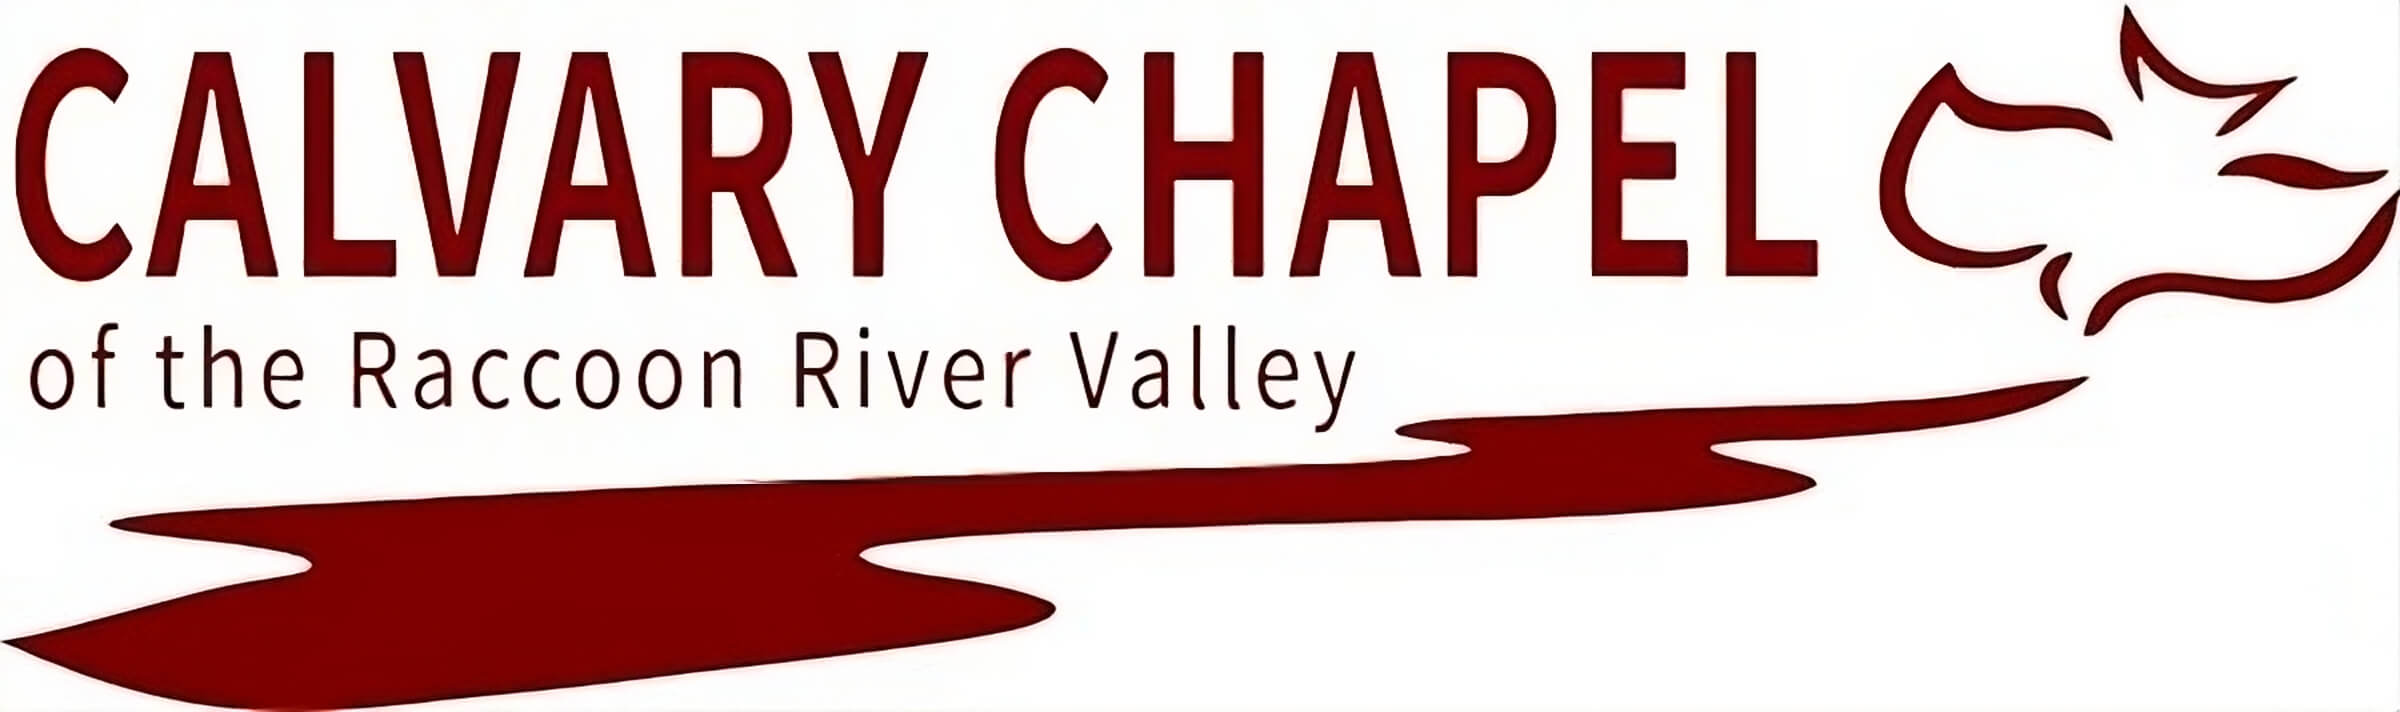 Calvary Chapel Raccoon River Valley